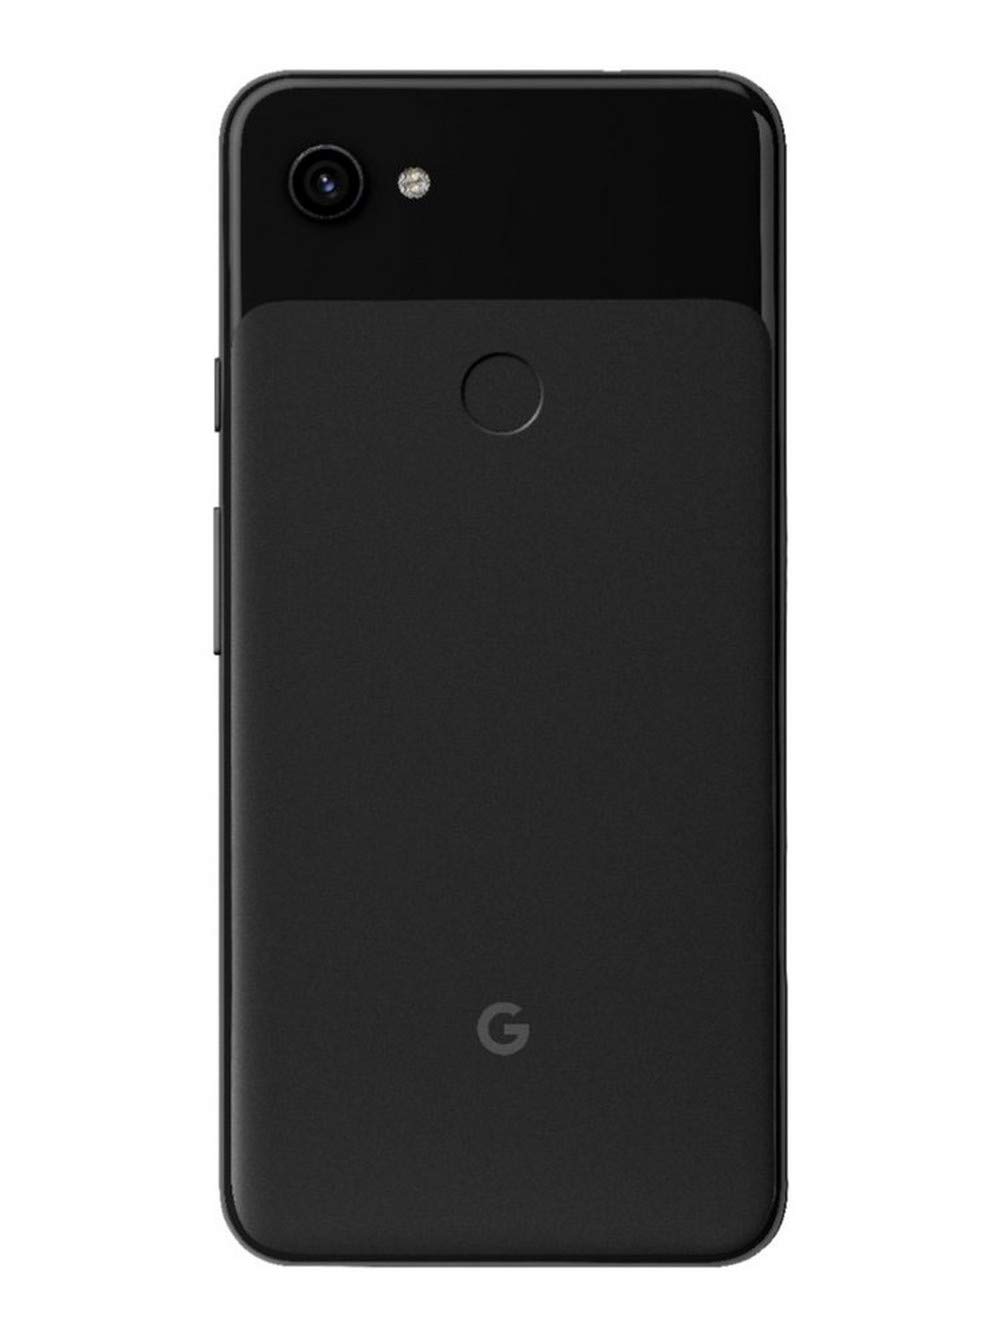 Google Pixel 3a XL 64GB SPRINT - Black (Sprint ONLY)